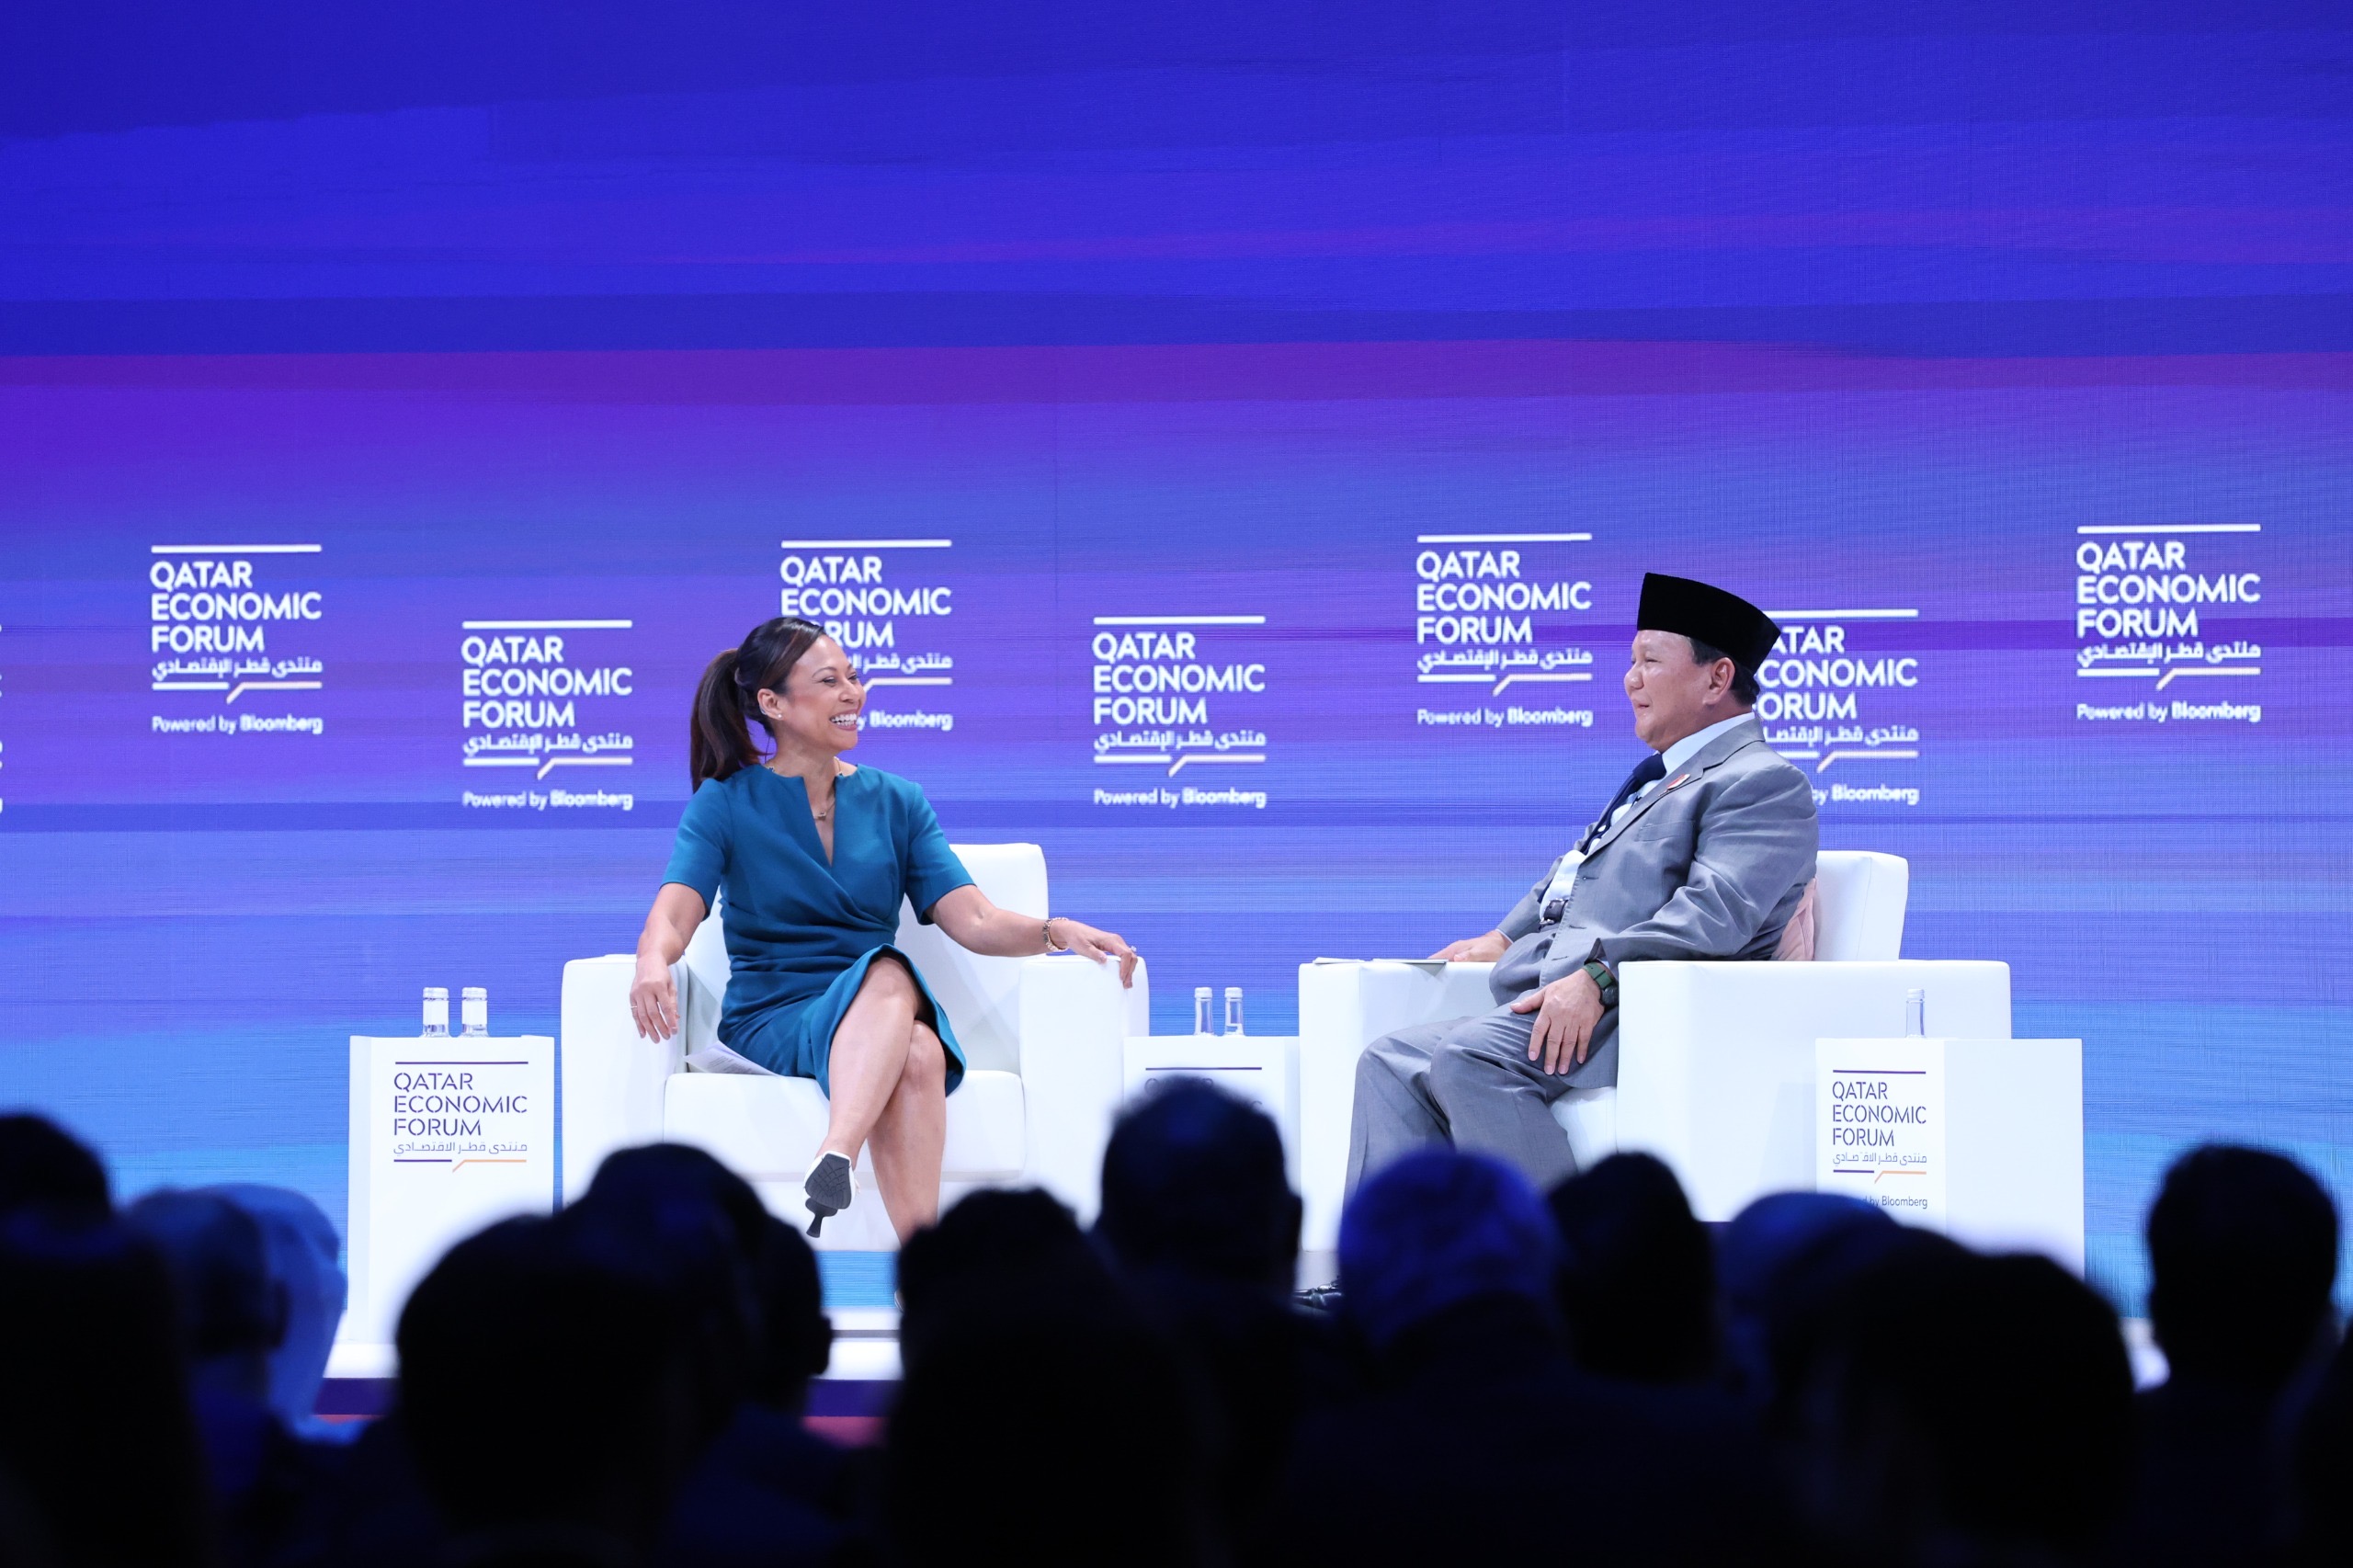 Presiden terpilih Prabowo Subianto pada acara Forum Ekonomi Qatar di Doha, Qatar. (Foto/Tim Prabowo)